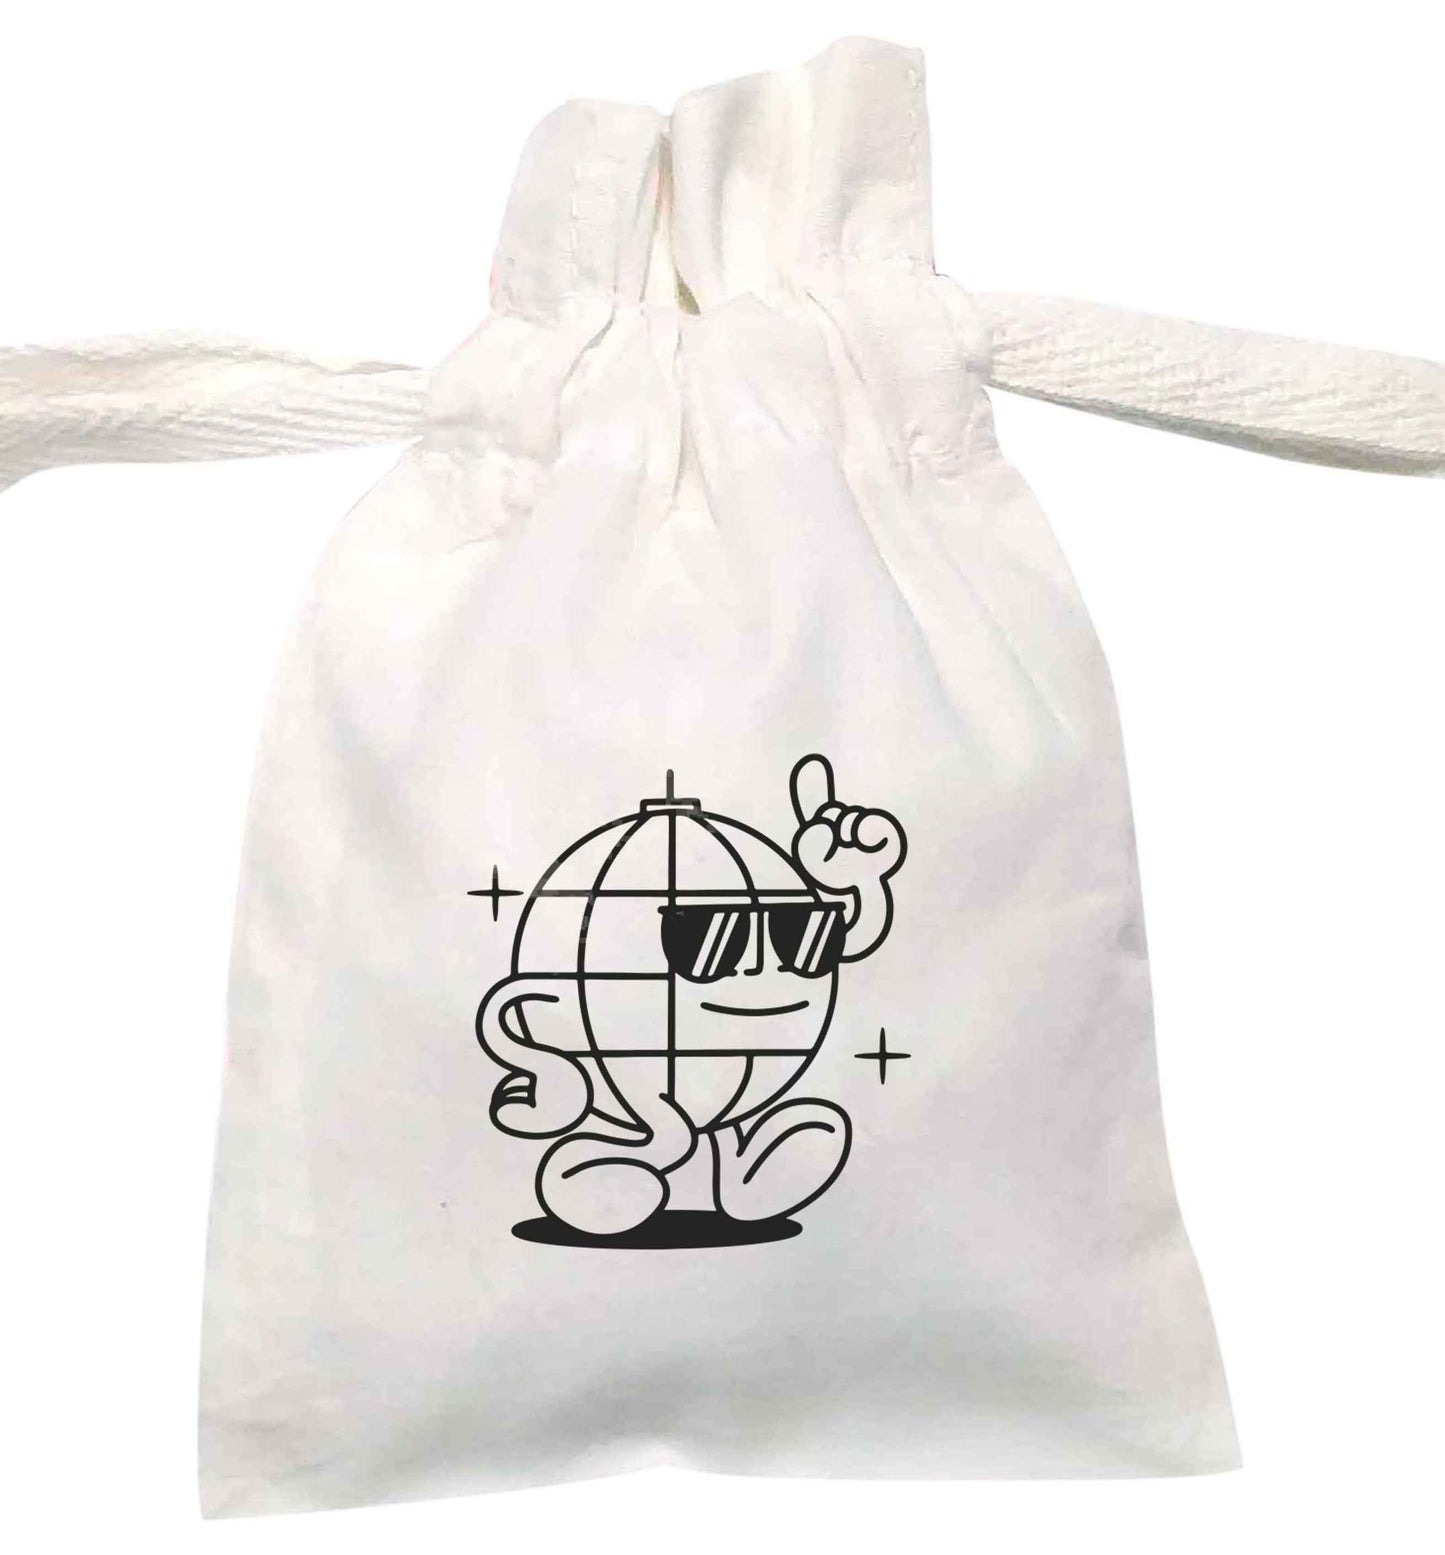 Disco ball | XS - L | Pouch / Drawstring bag / Sack | Organic Cotton | Bulk discounts available!